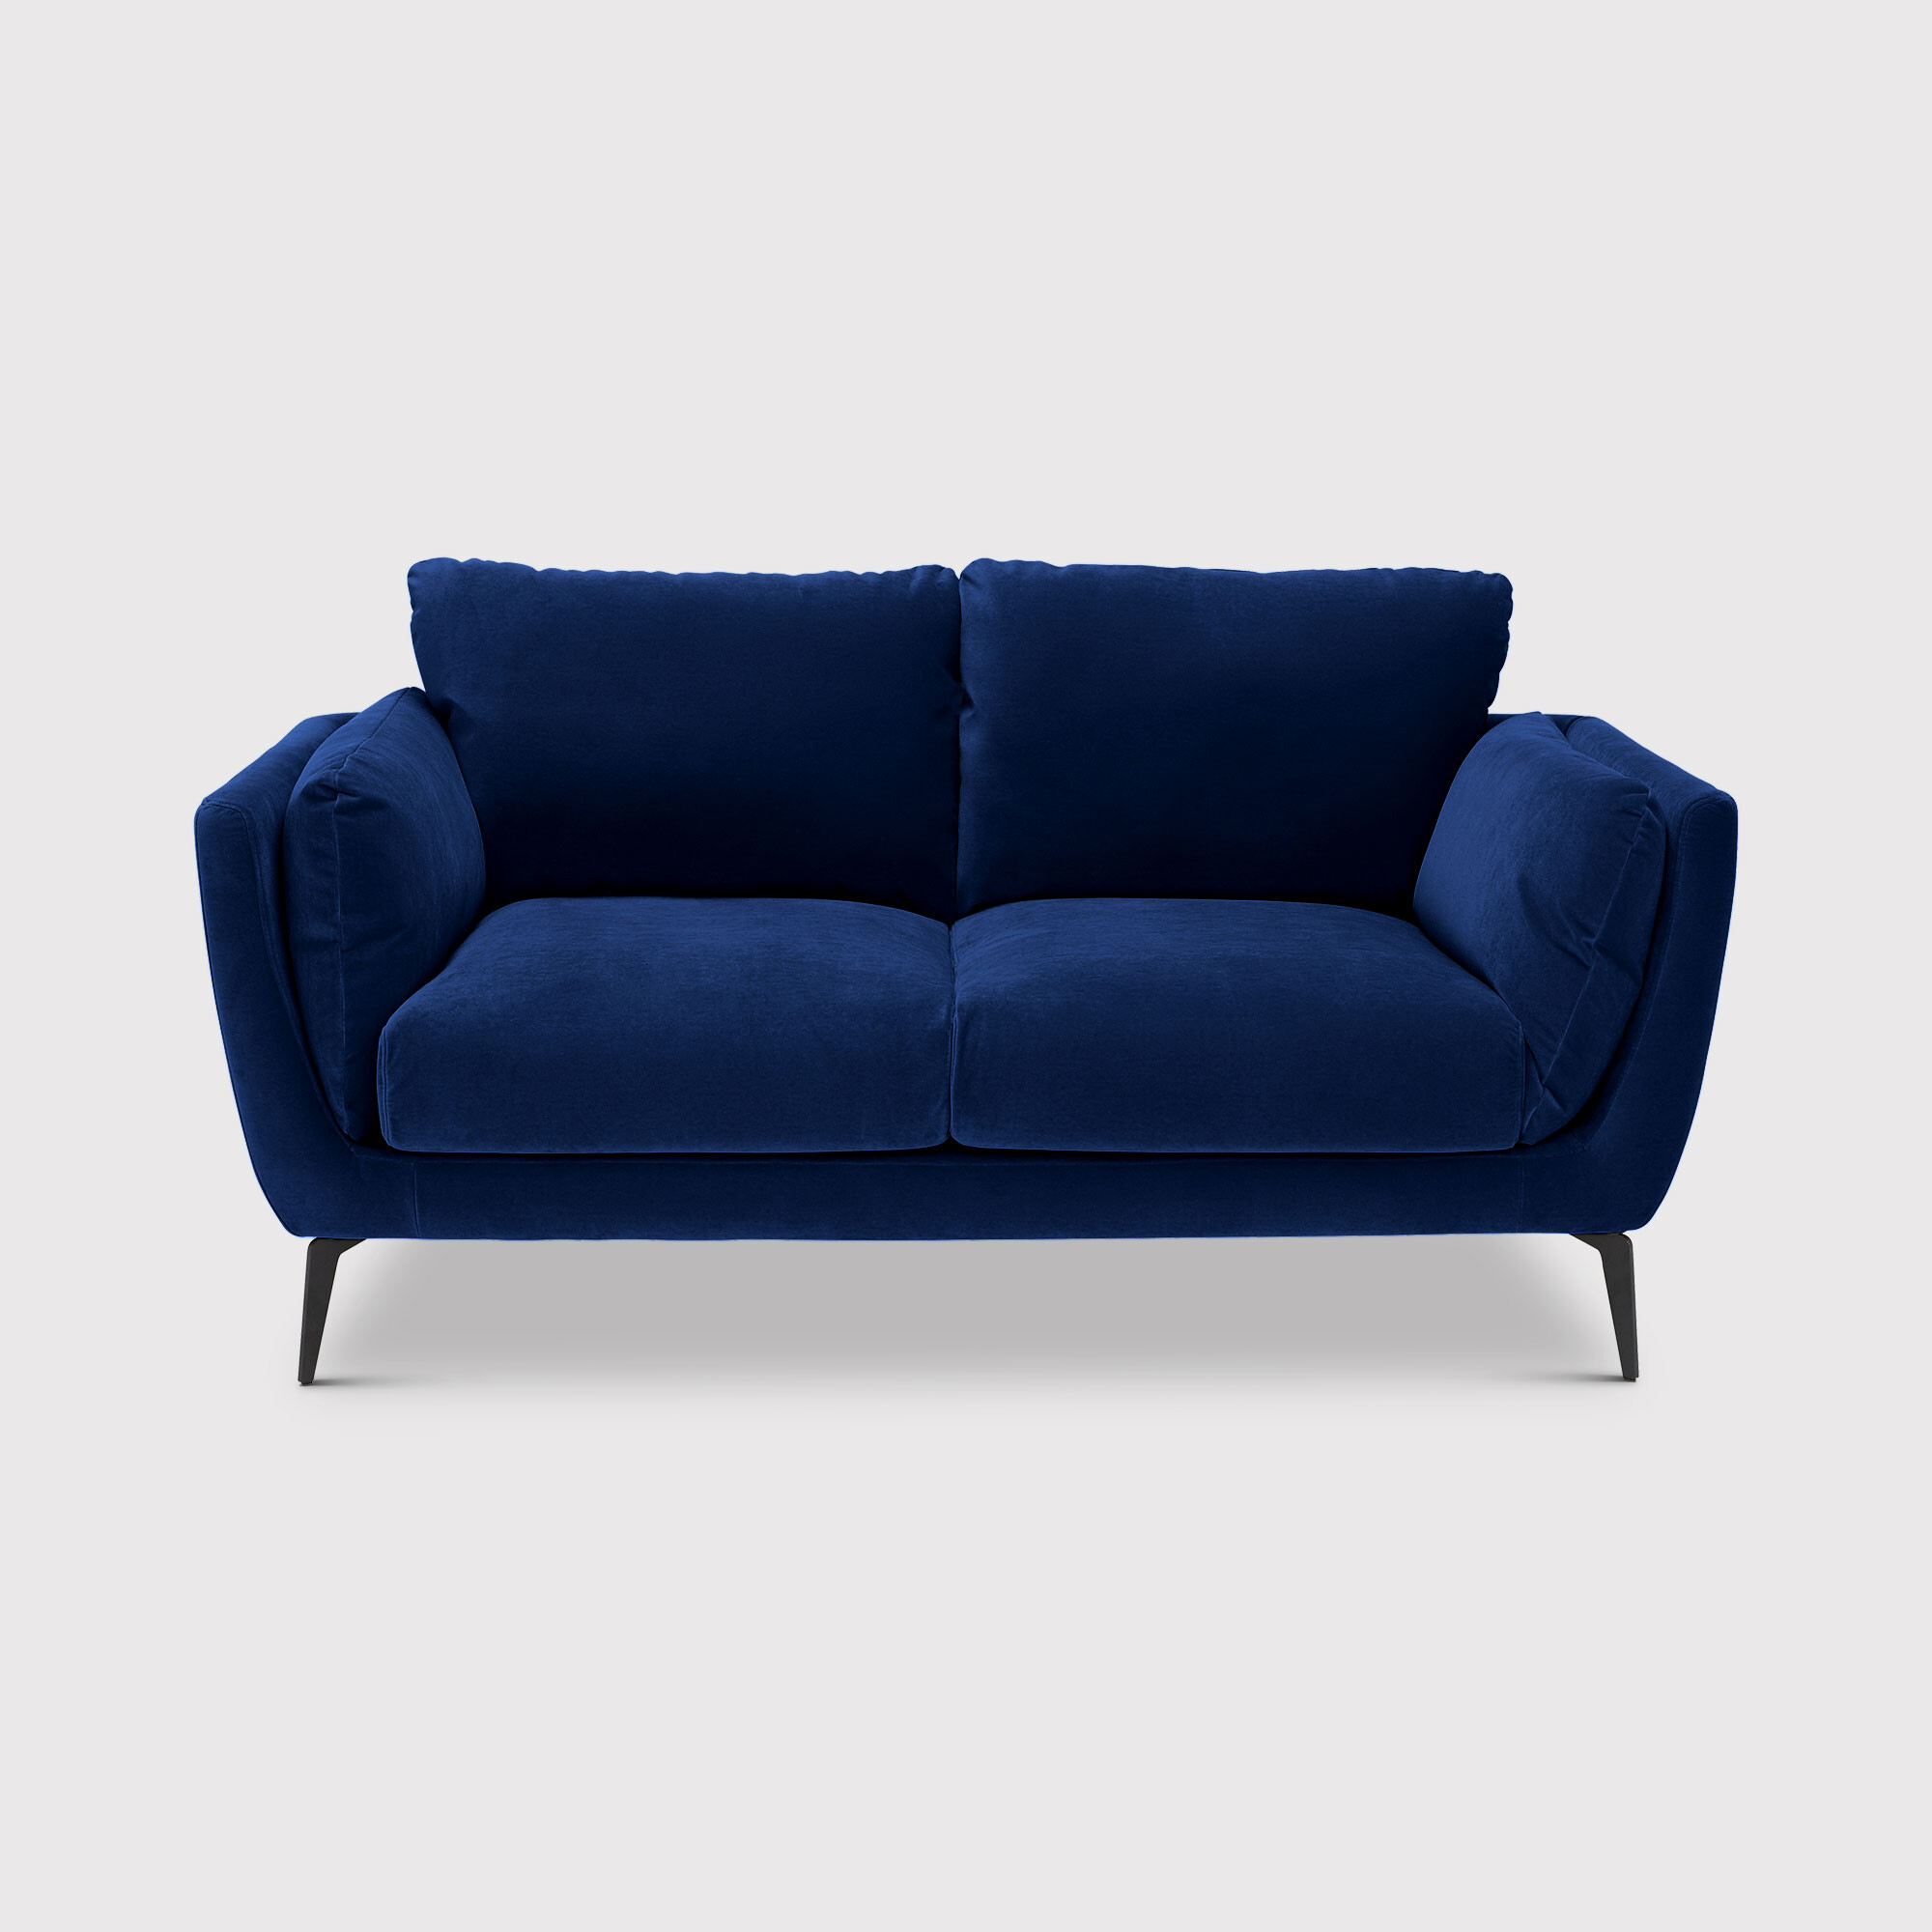 Boone 2 Seater Sofa, Navy Fabric | Barker & Stonehouse